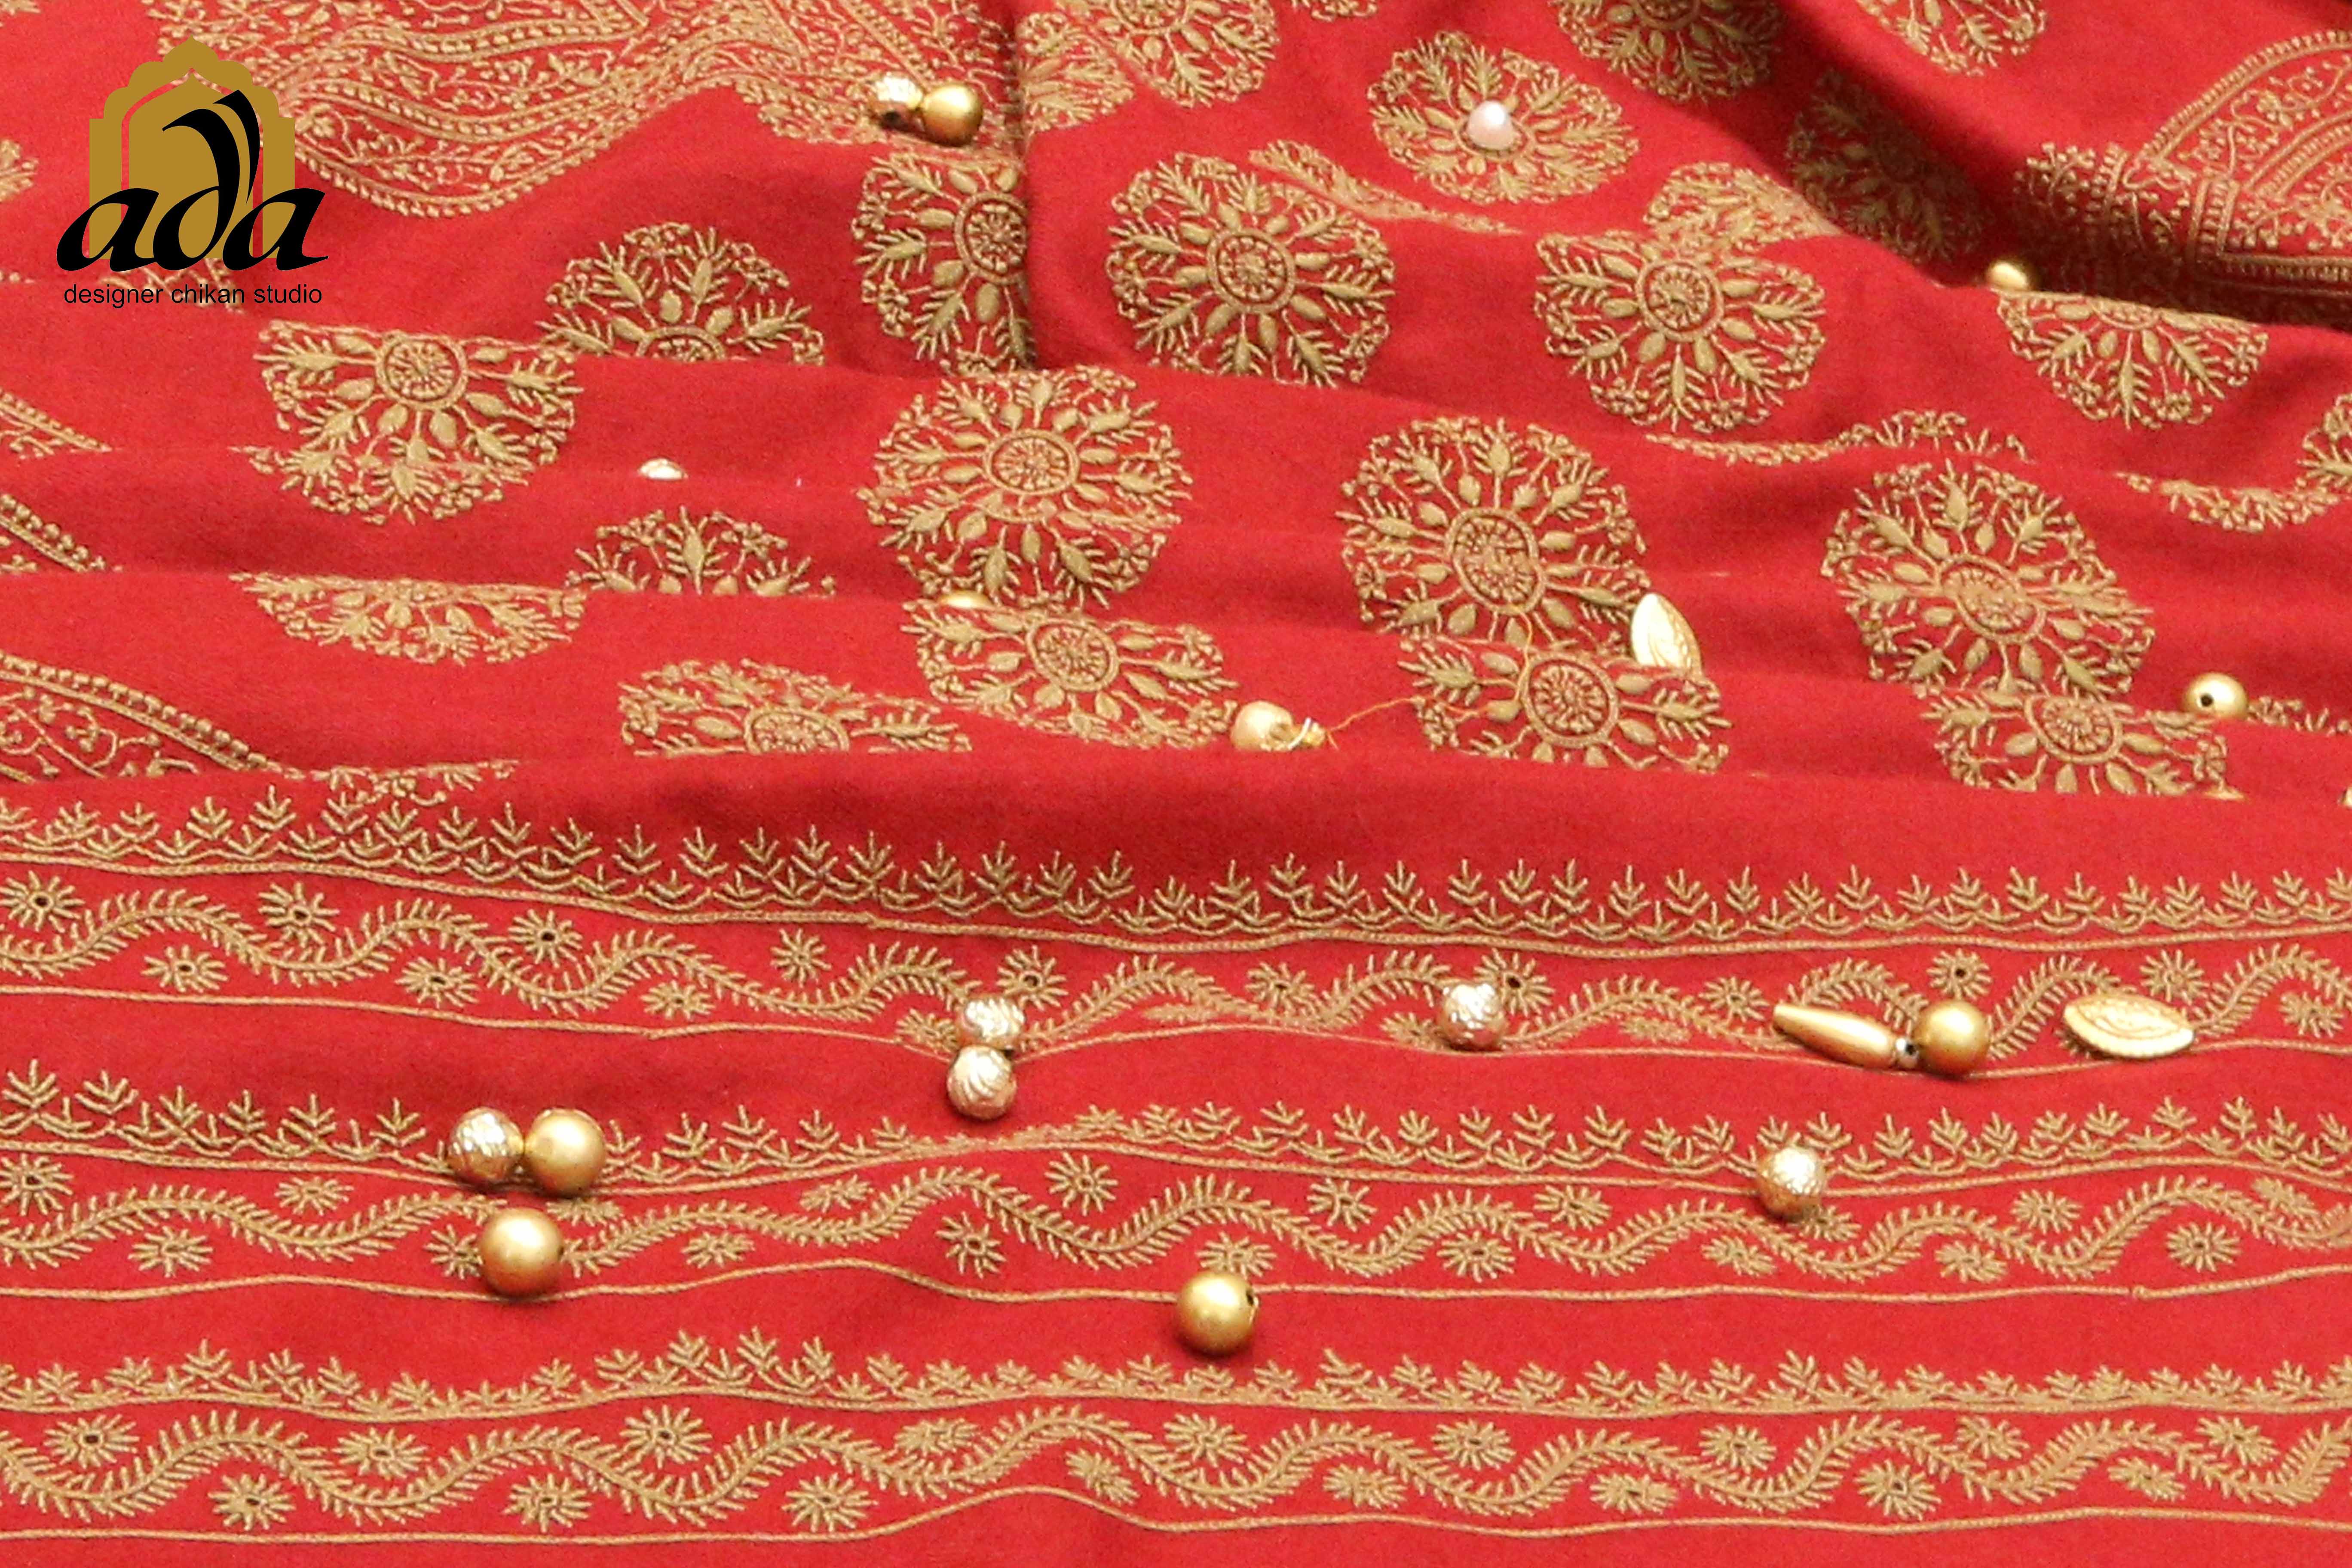 Fine chikankari stitches shown on kashmir's pashmina in briht cherry red shawl adorned with cream color pearls